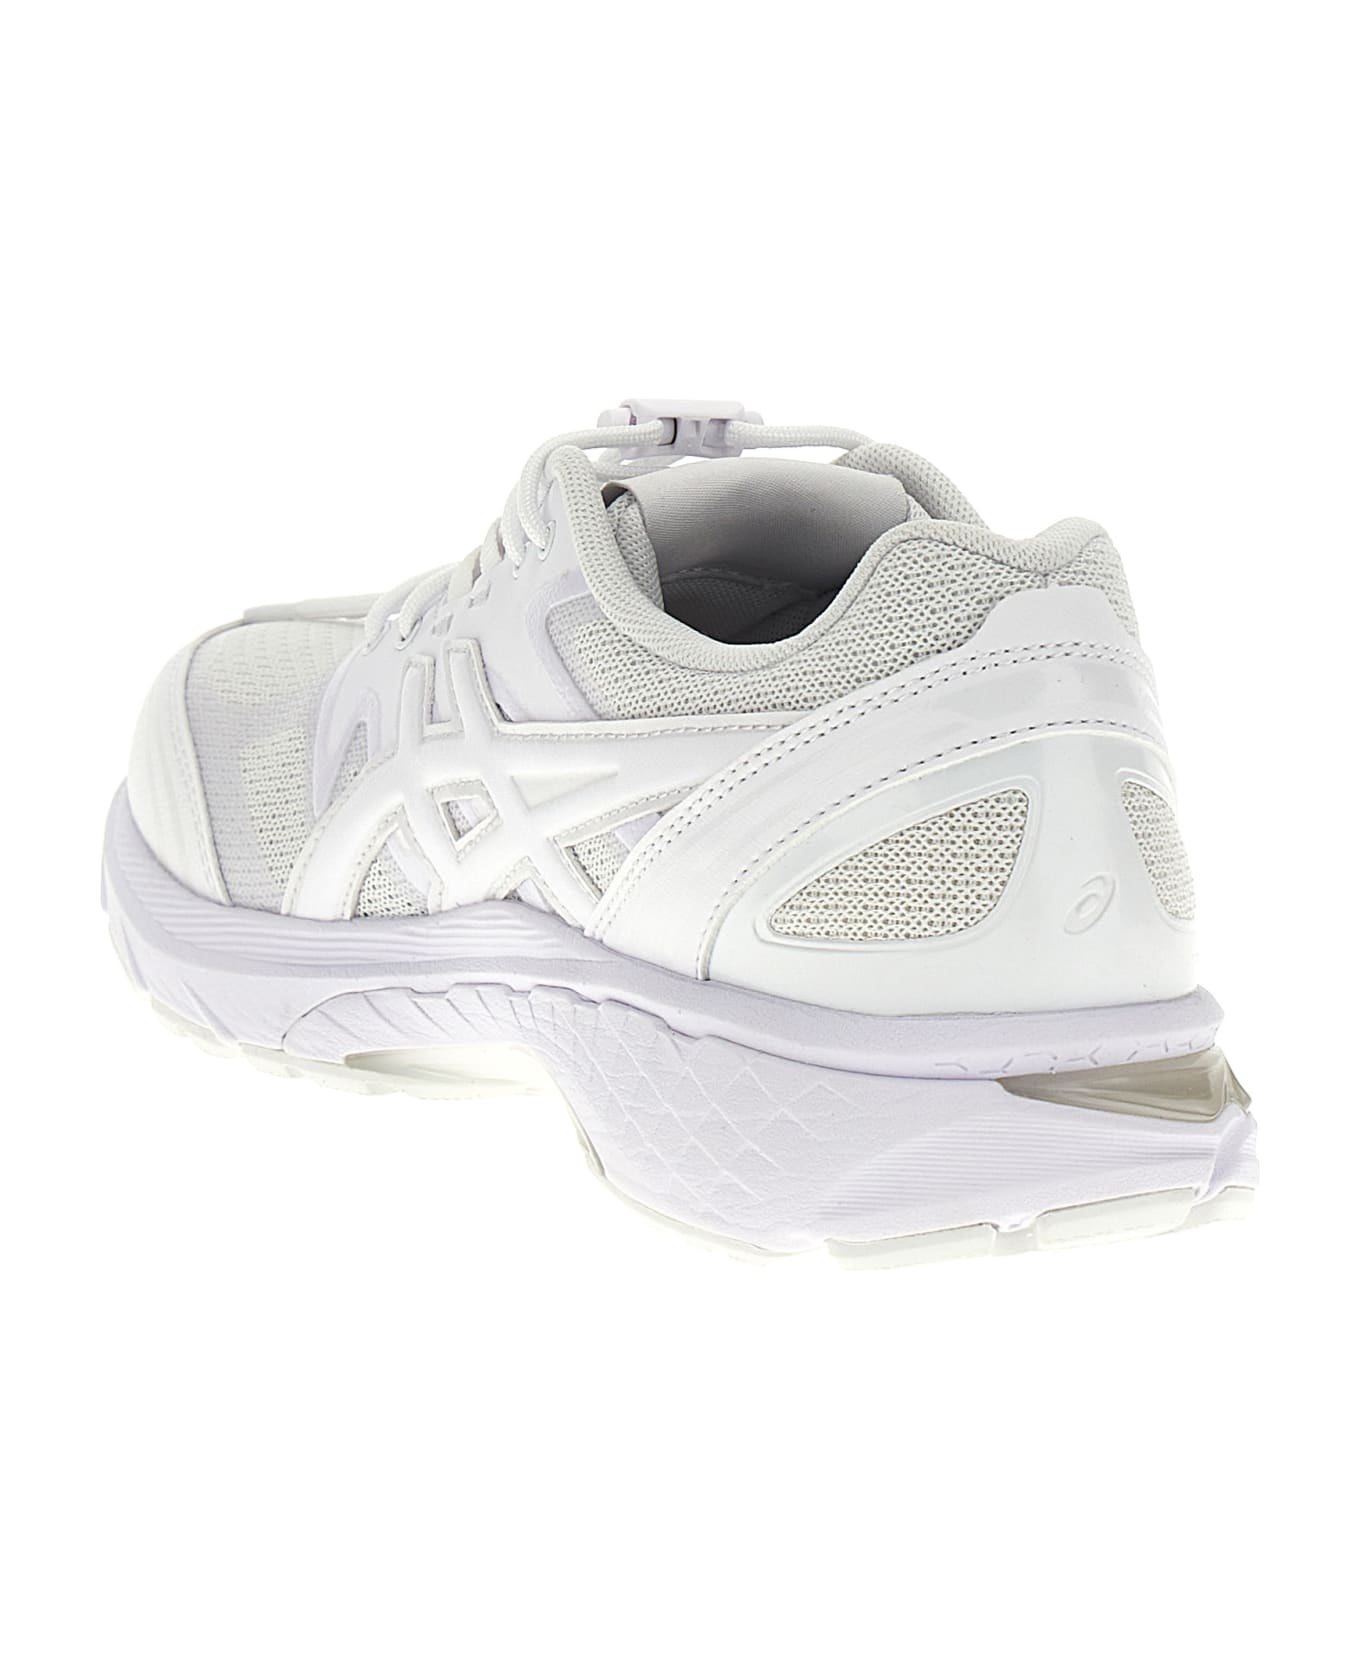 Comme des Garçons Shirt 'gel-terrain' Sneakers - Bianco